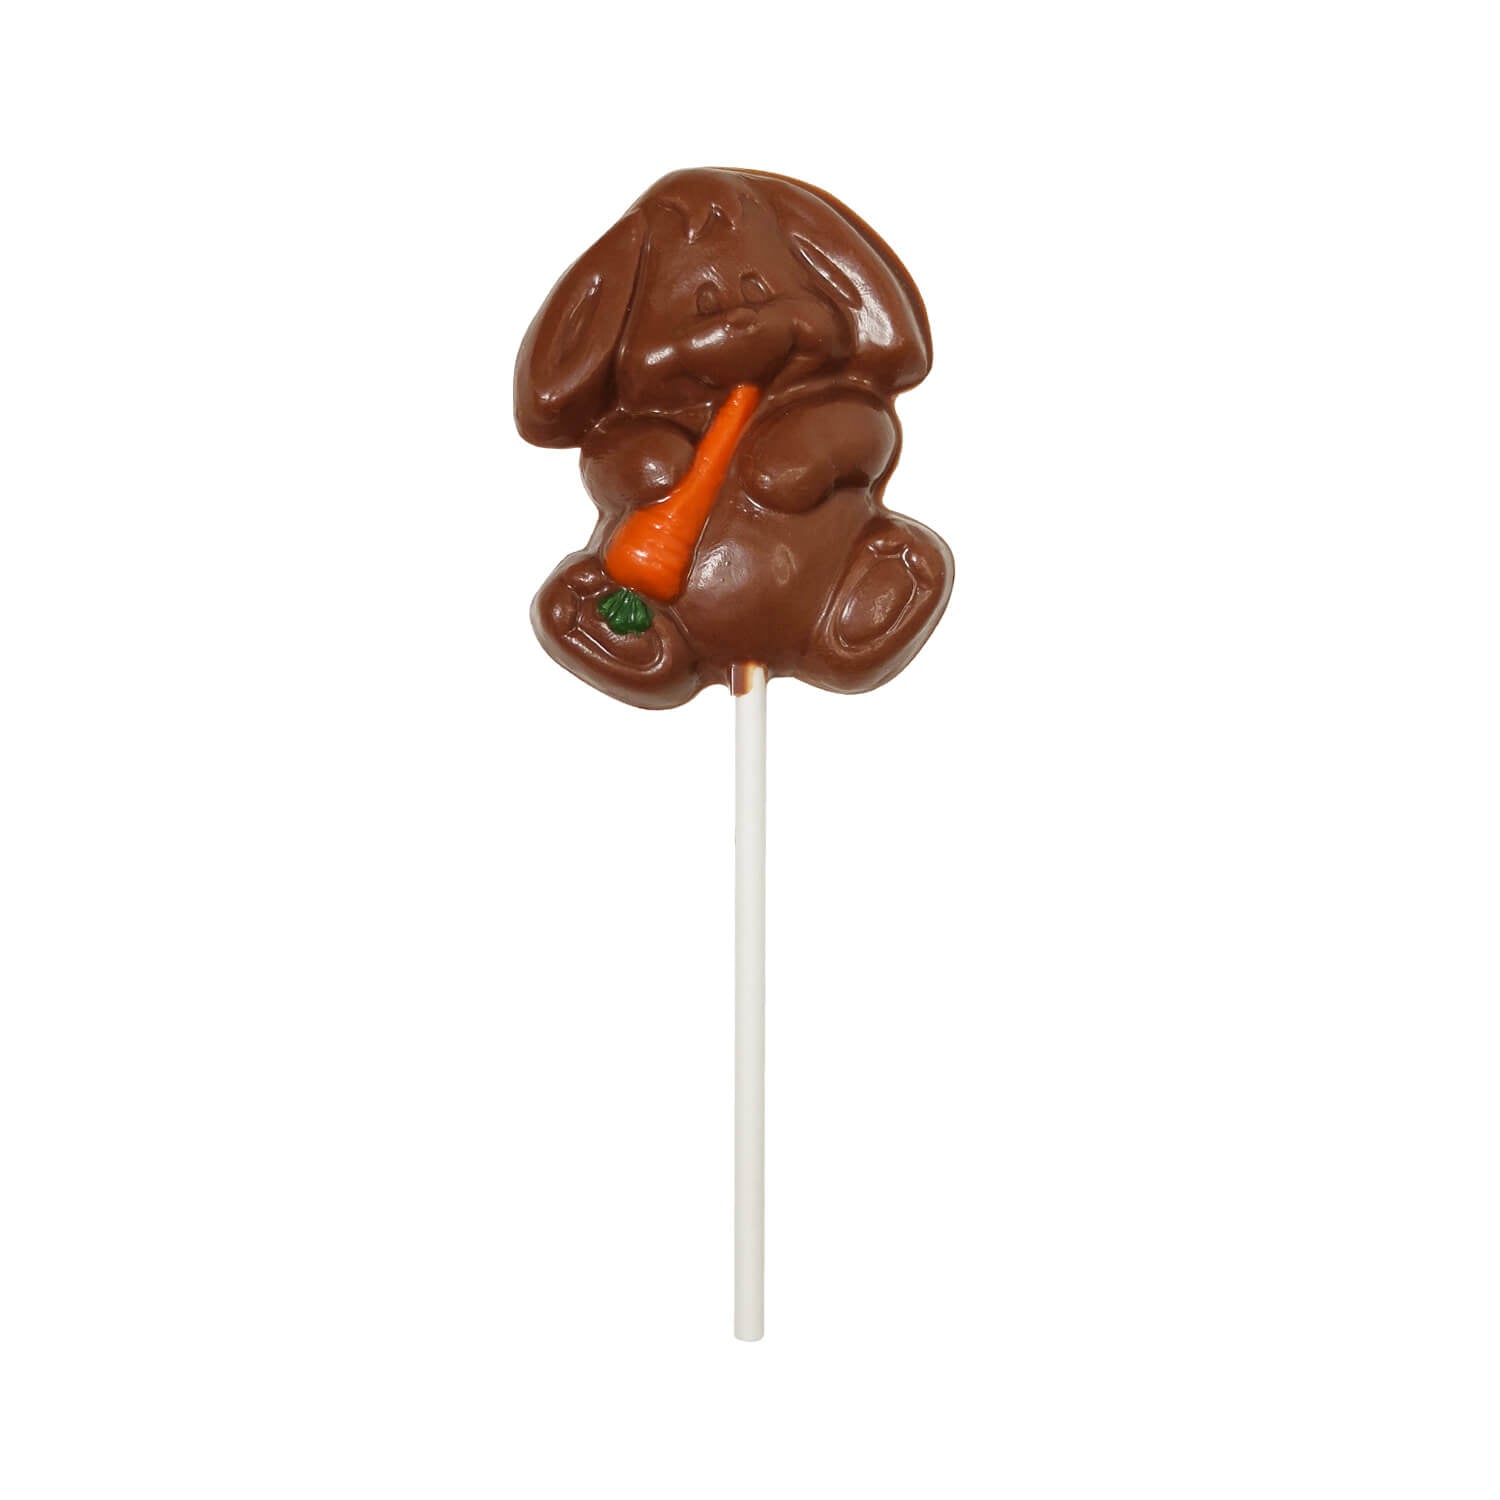 Belgian chocolate Bunny lollipop - 1 unit